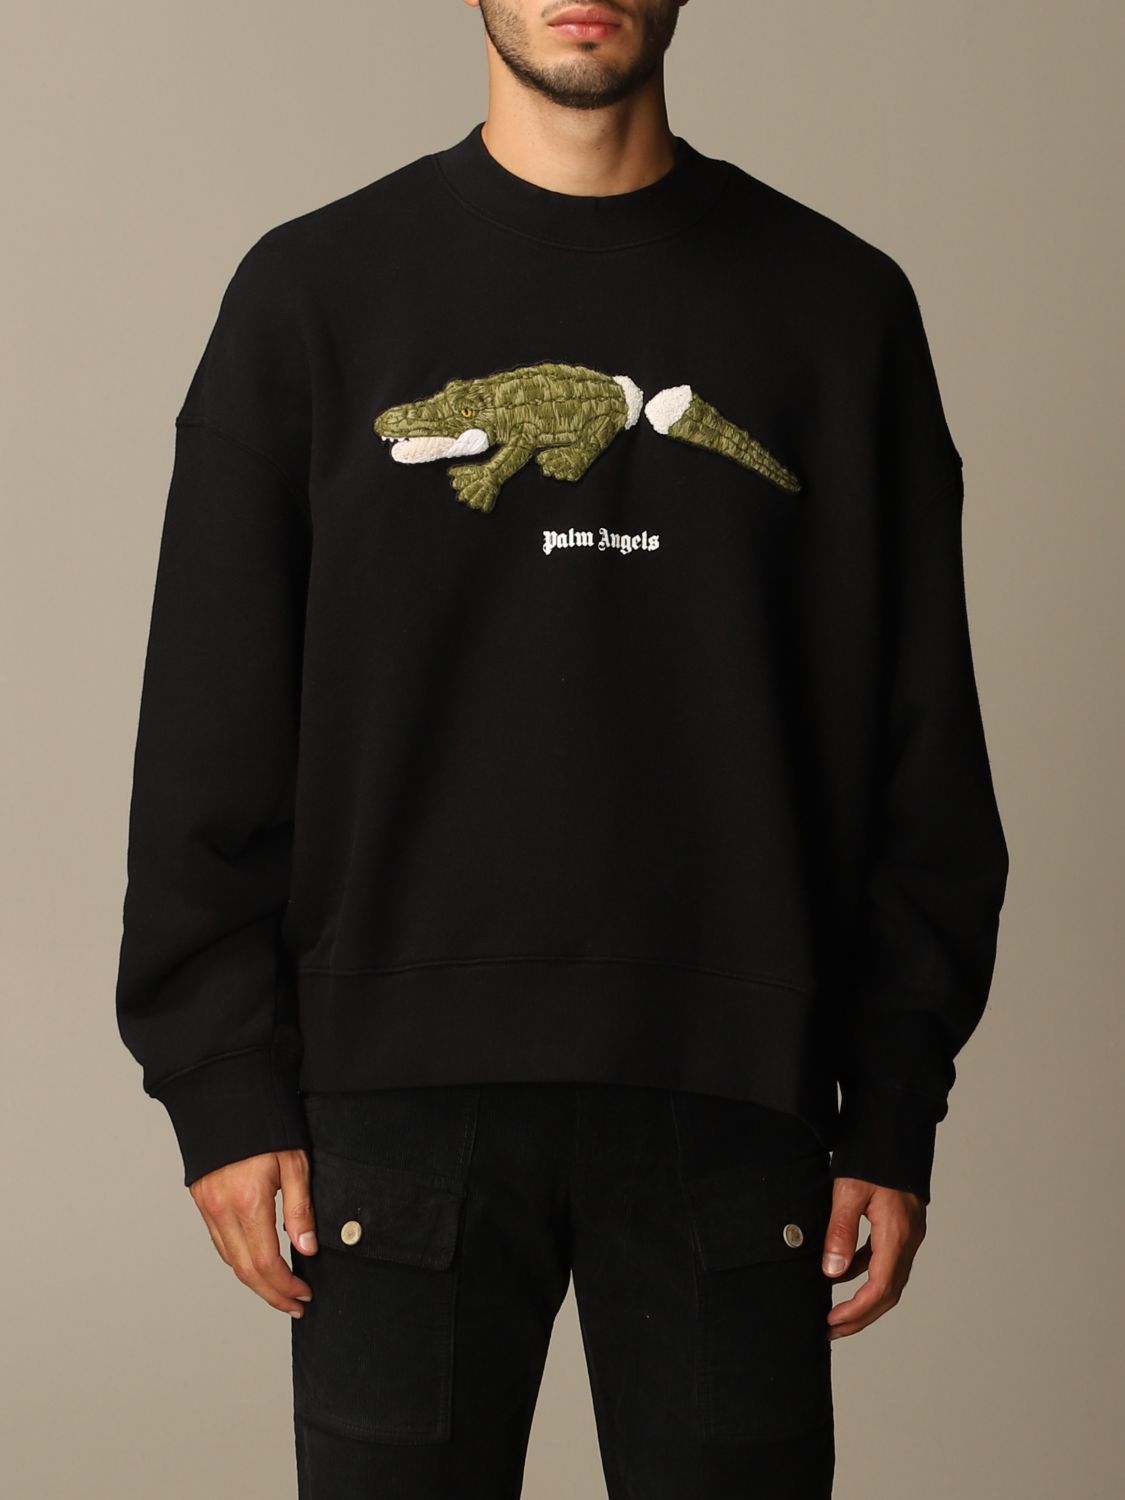 Palm Angels cotton sweatshirt with crocodile patch